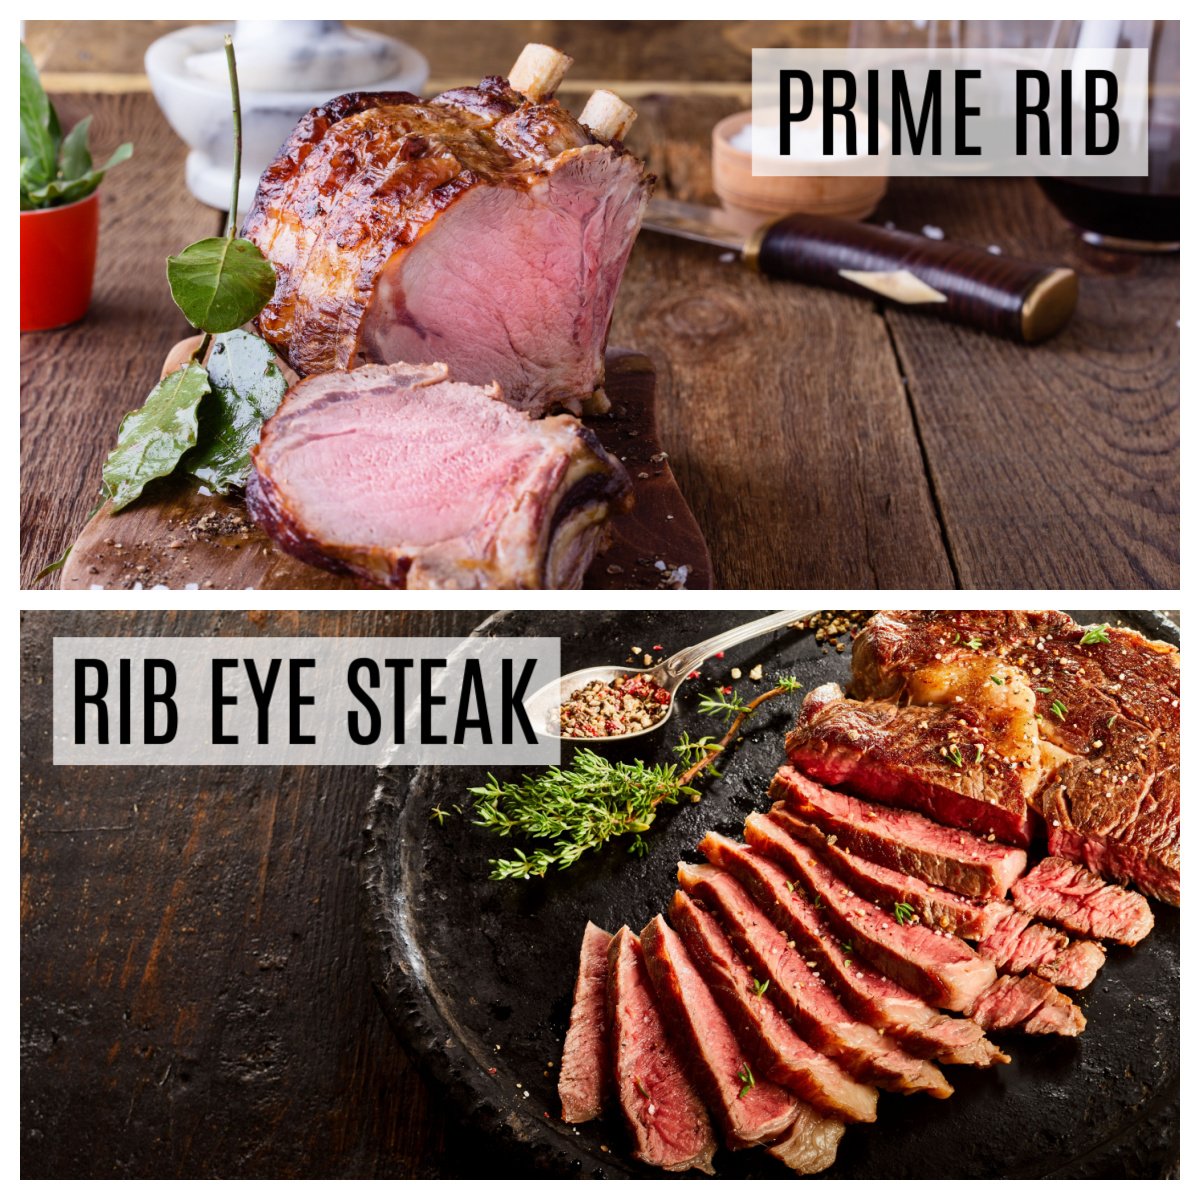 comparing prime rib versus rib eye steak main differences